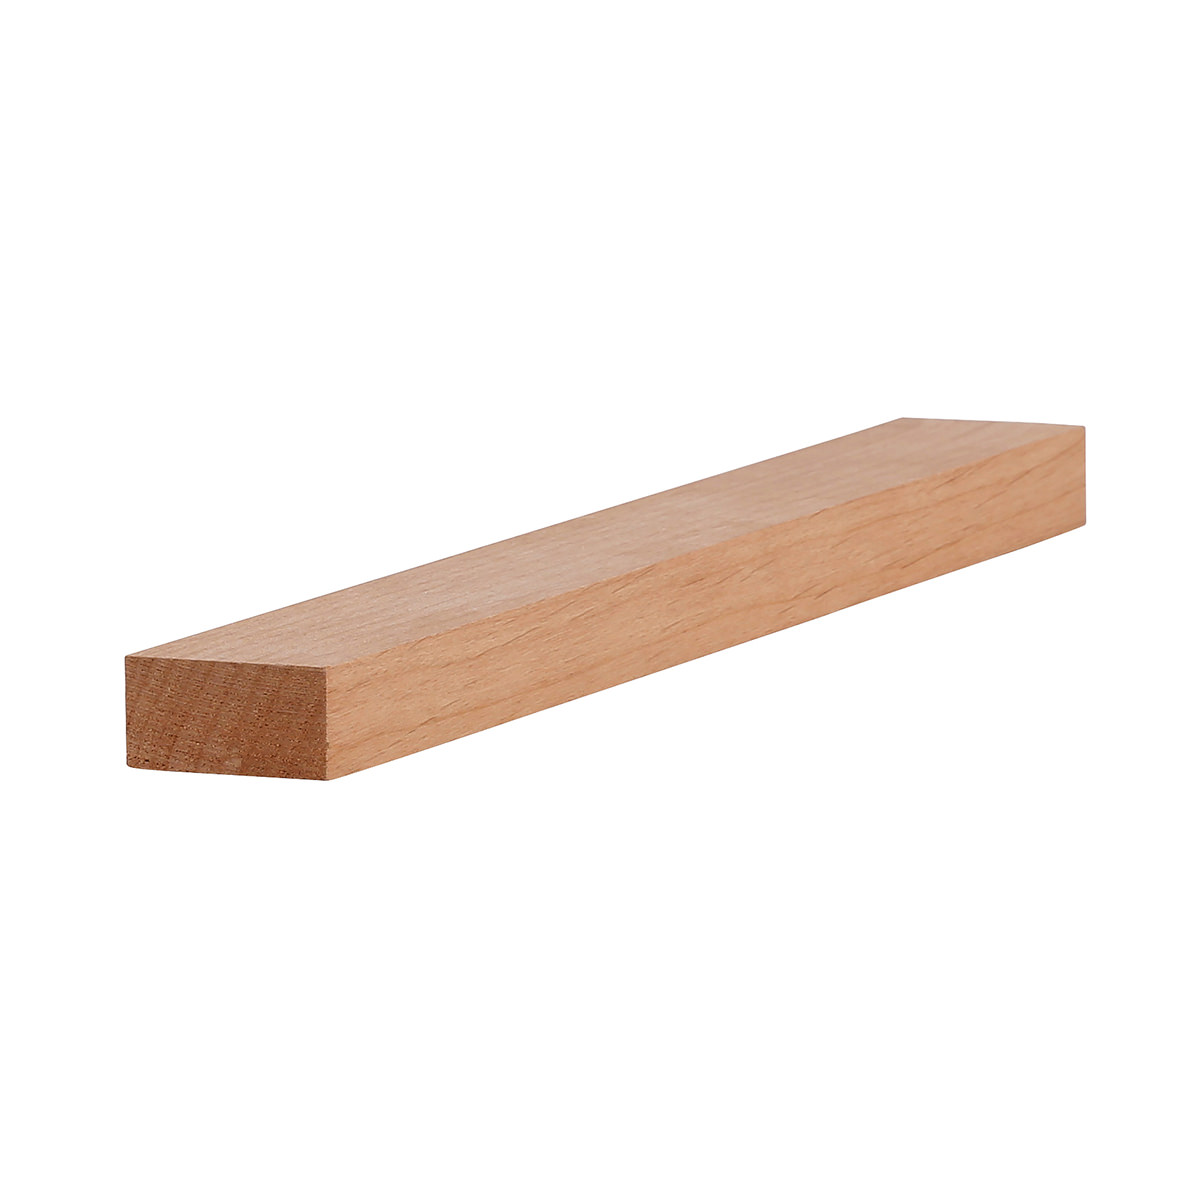 1x2 (3/4" x 11/2") Natural Alder S4S Lumber, Boards